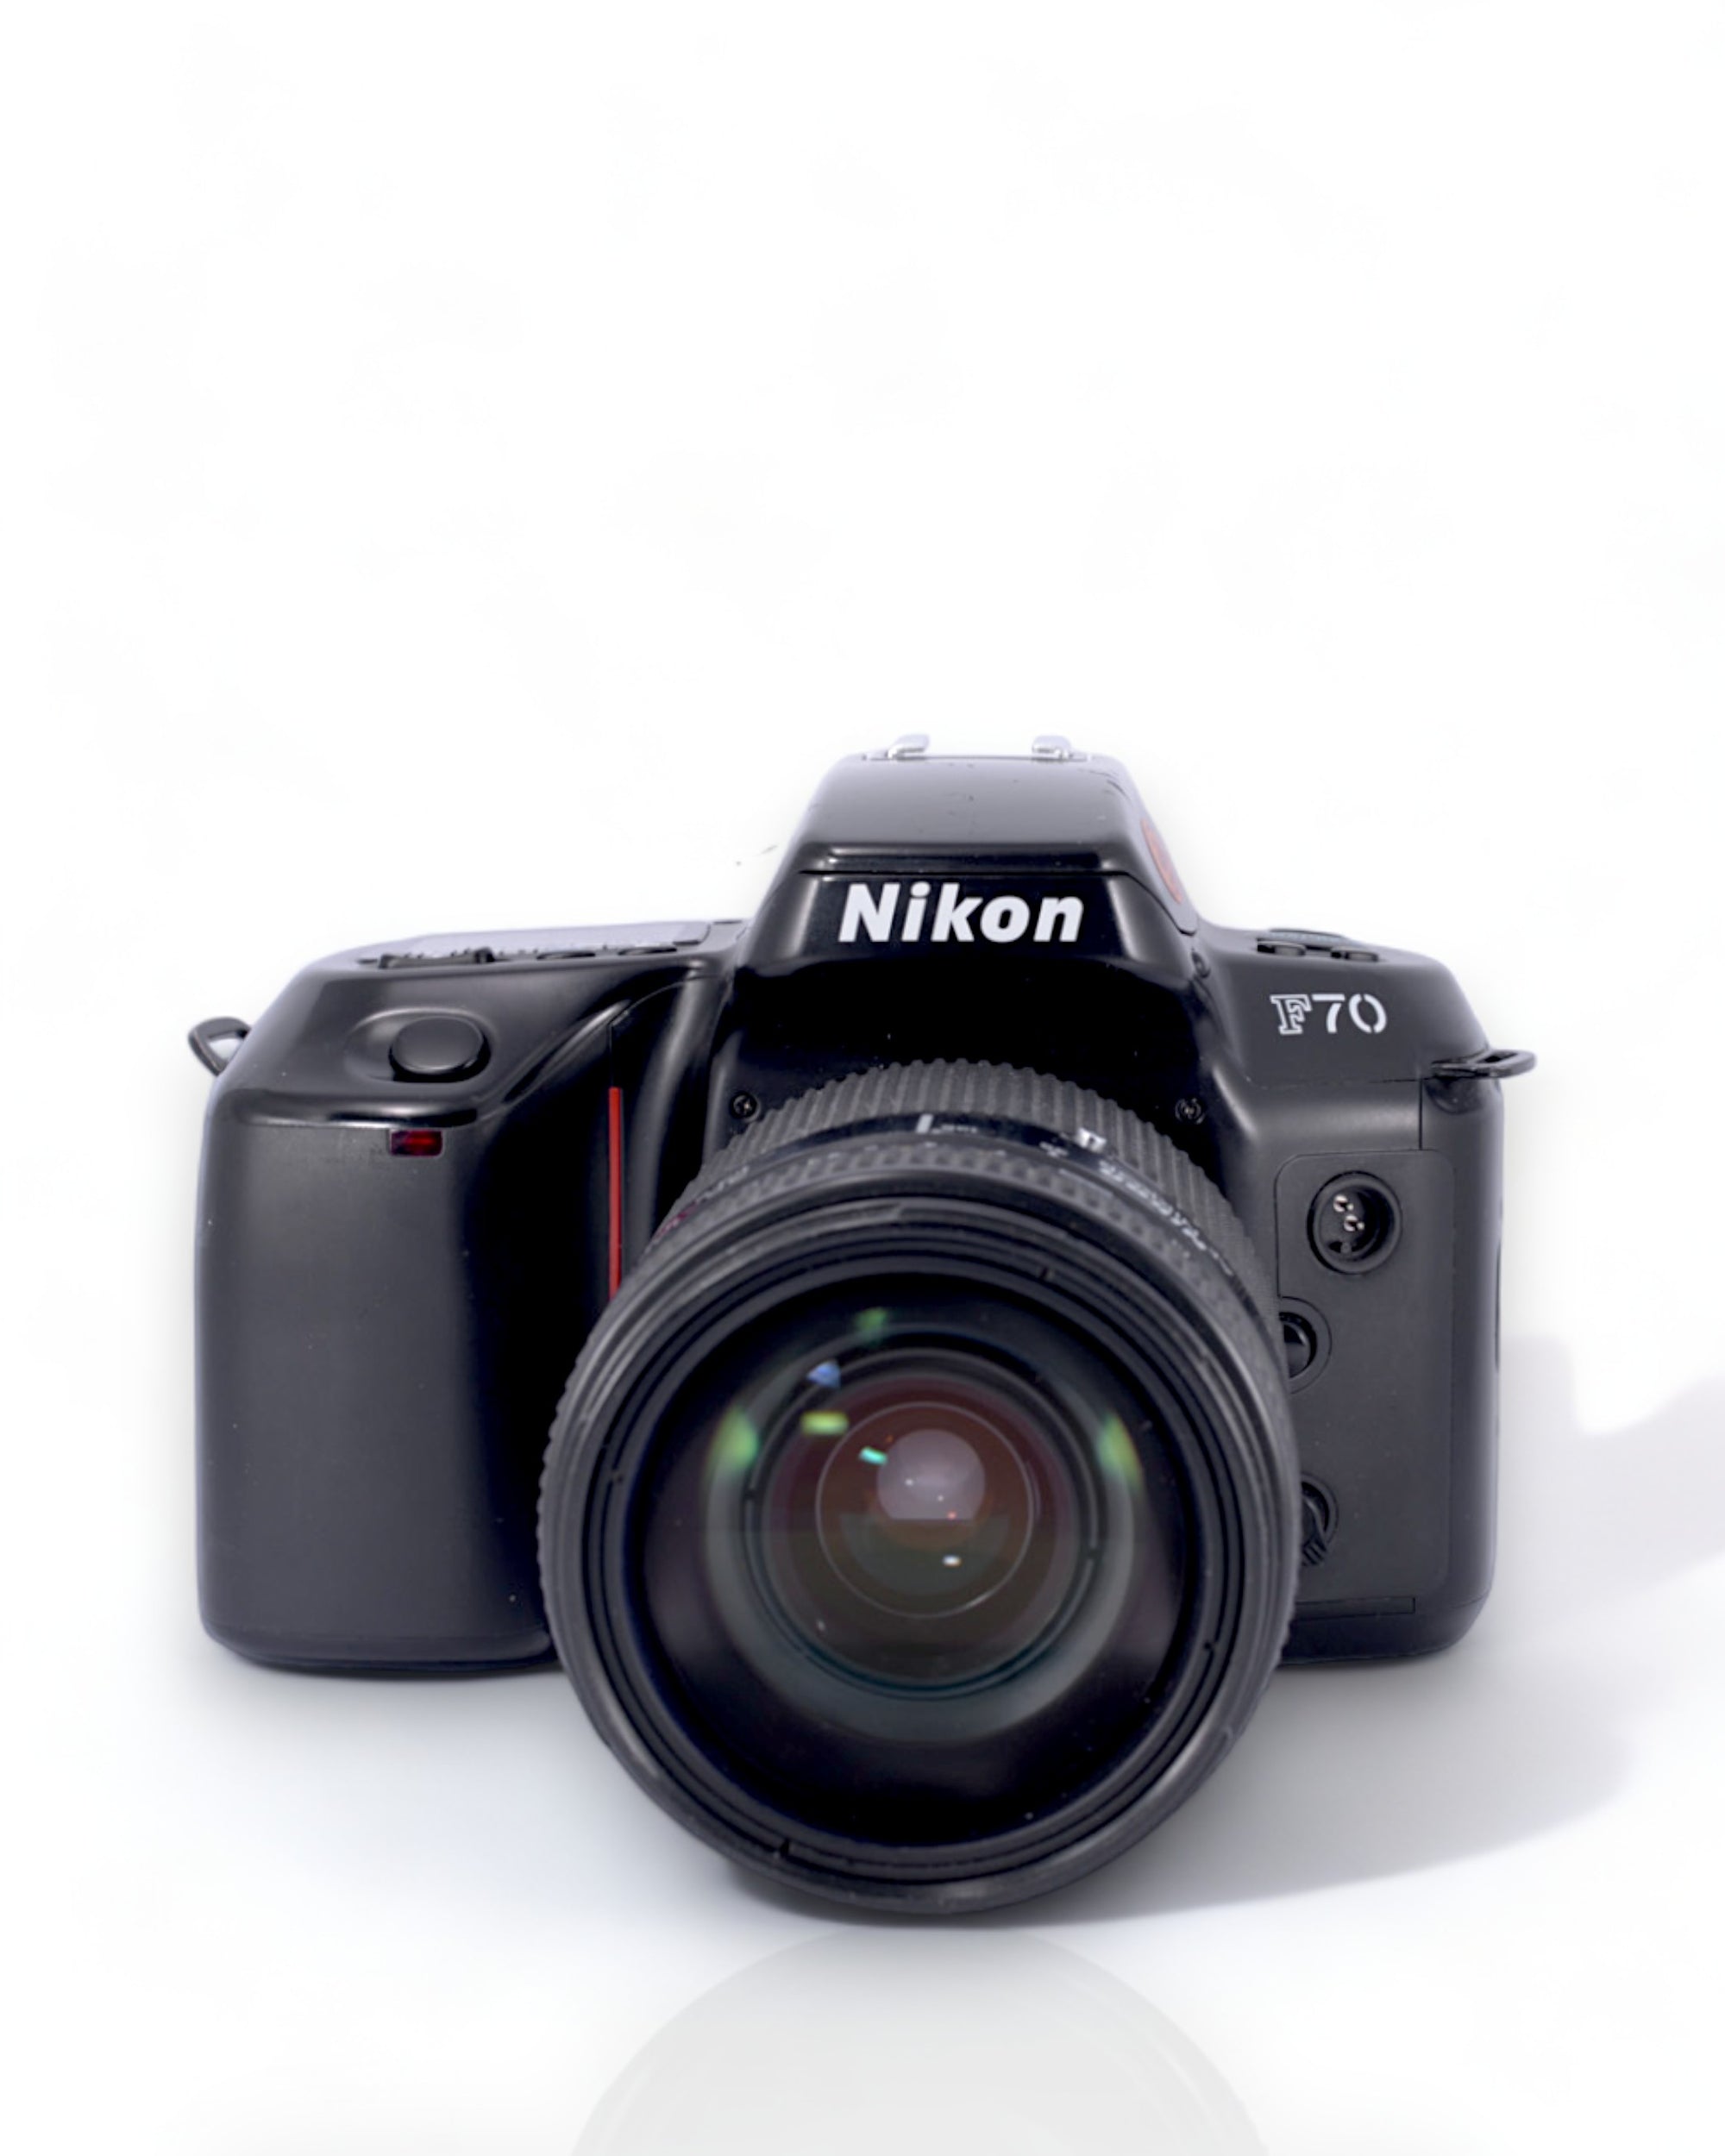 Nikon F70 35mm SLR film camera with 35-135mm lens